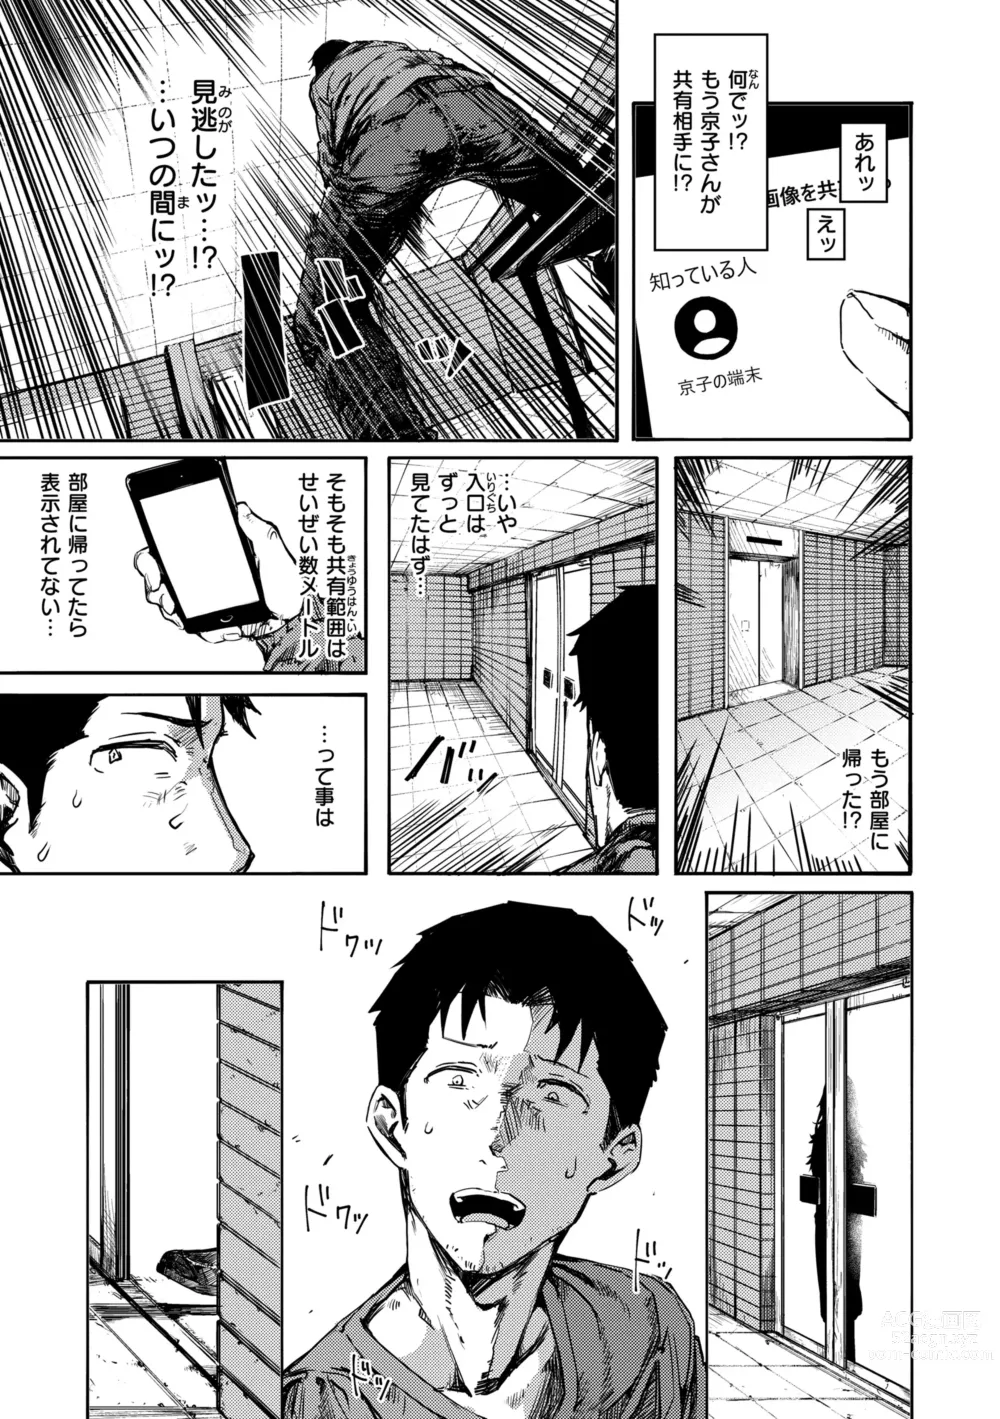 Page 11 of manga OHO-goe no Hibiku Machi - OHO voice echoes in the town♥